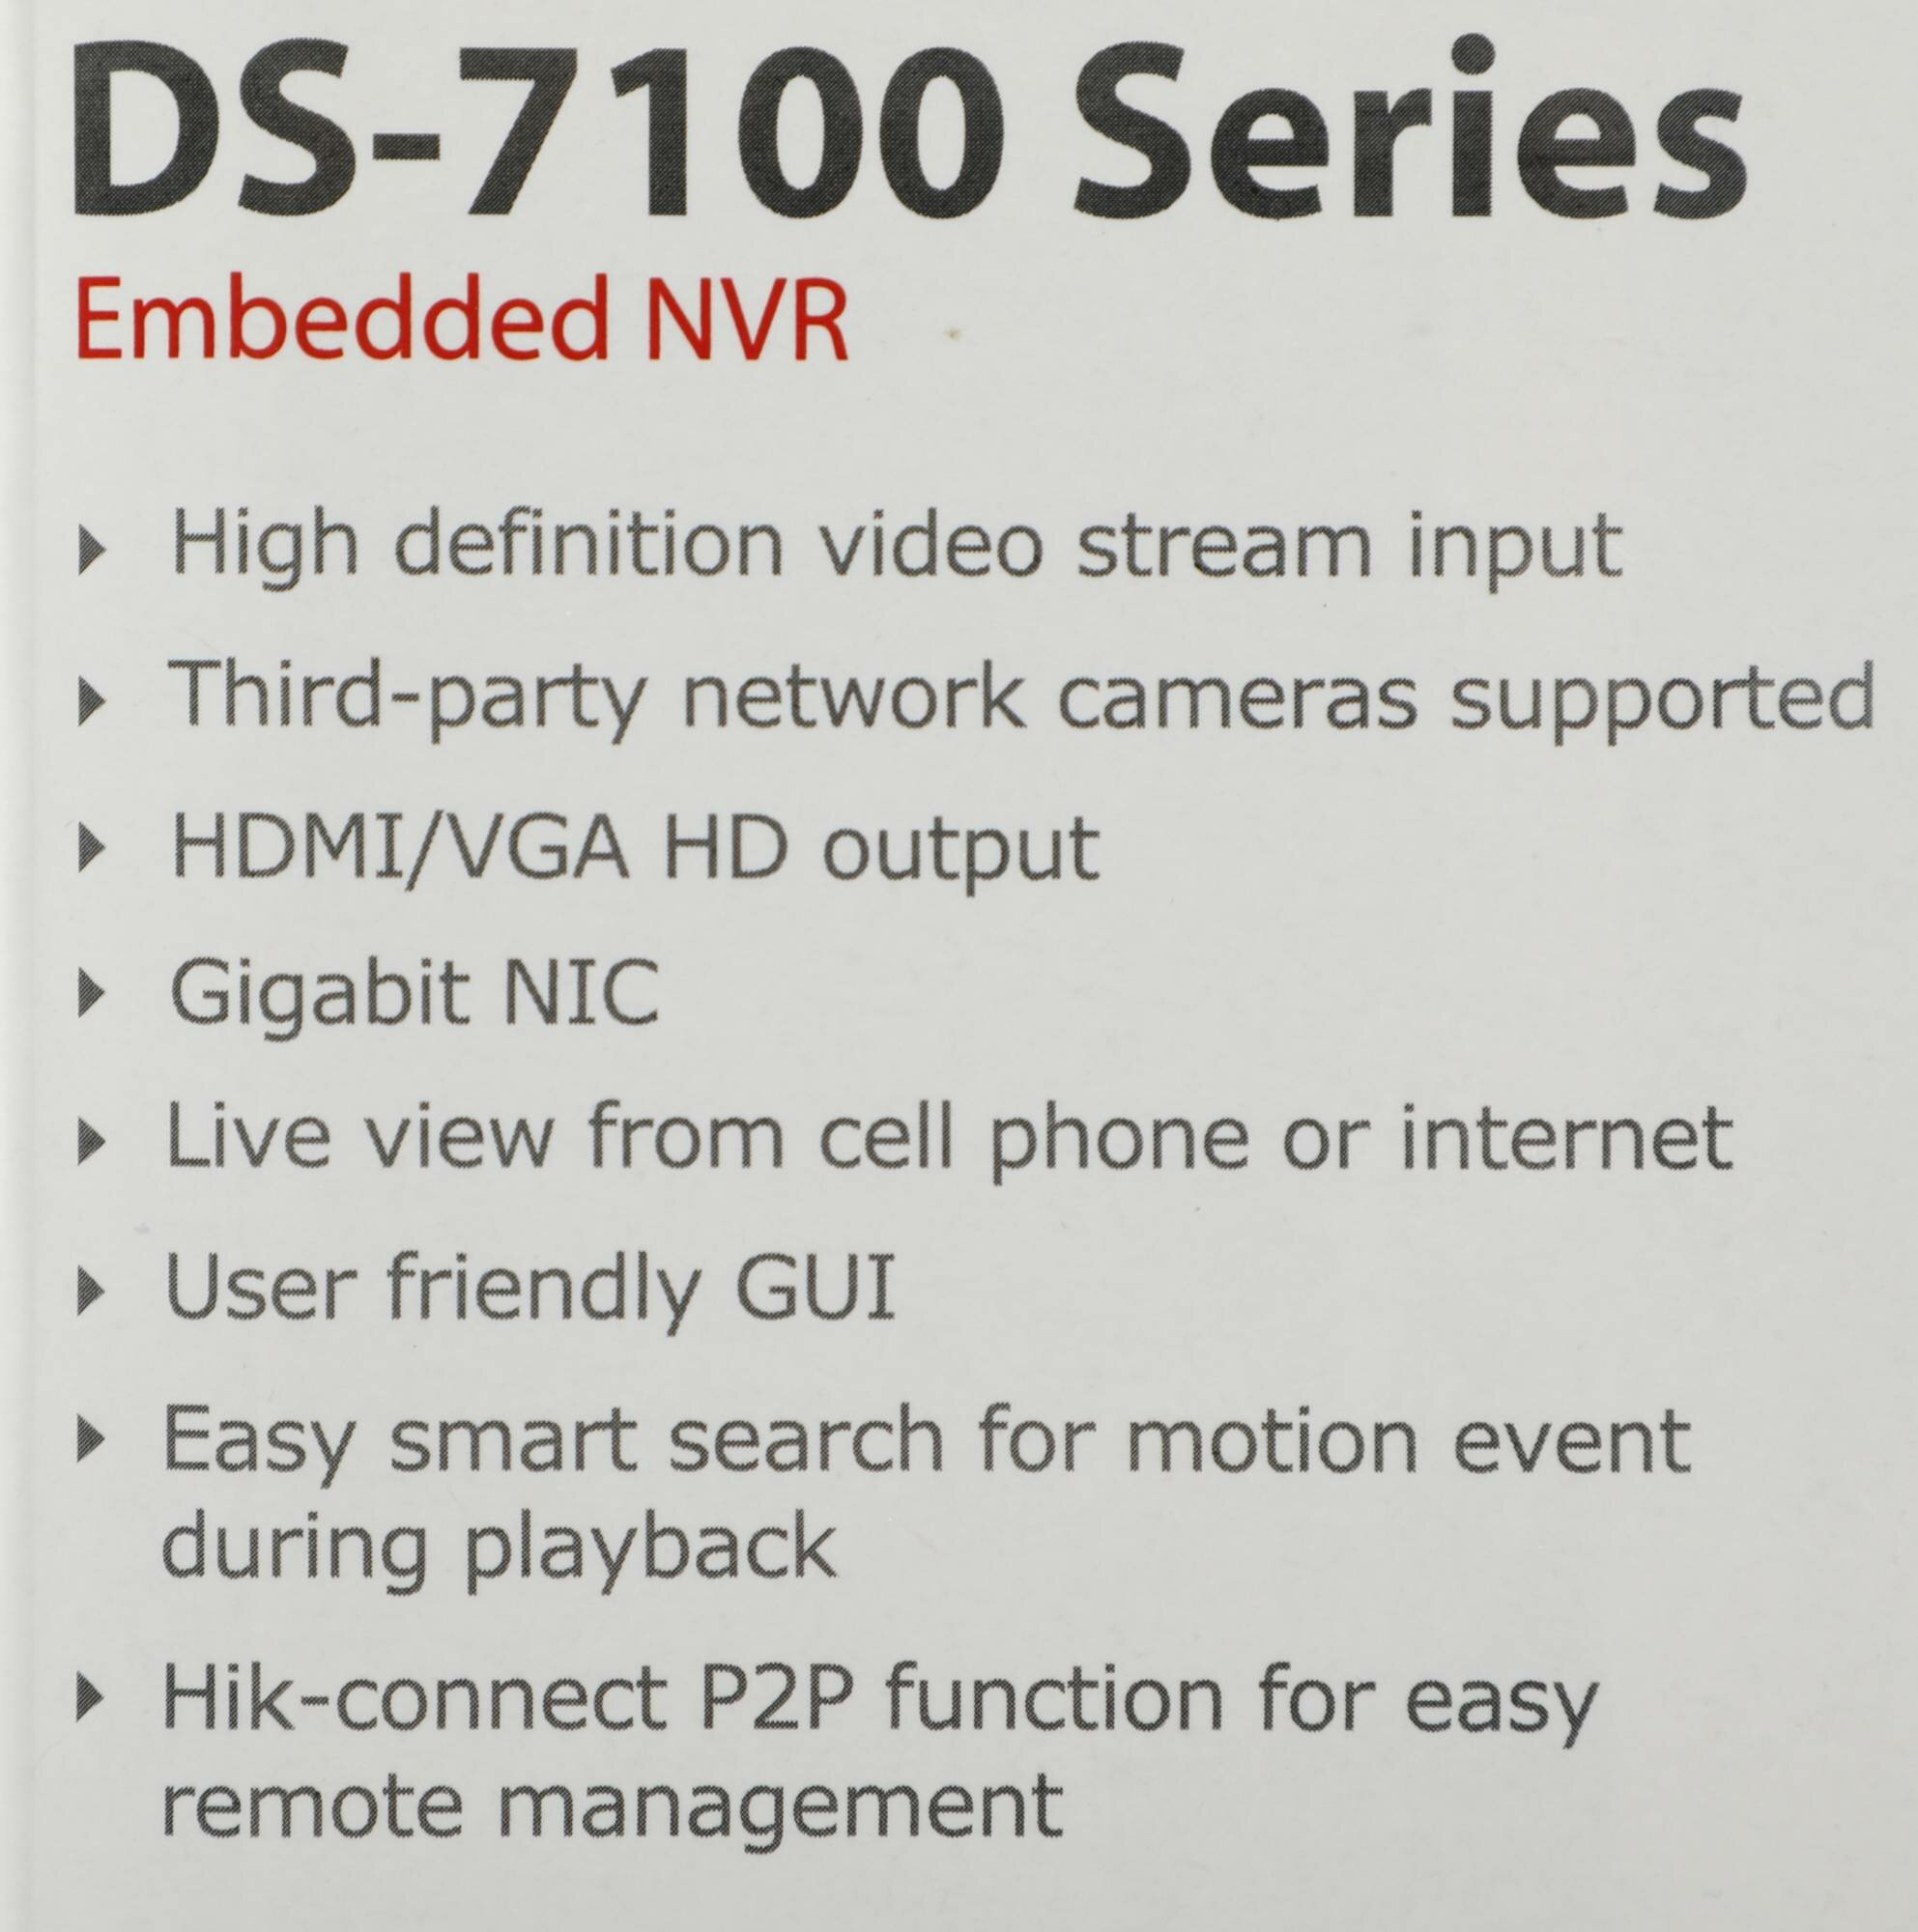 Hikvision IP-видеорегистратор DS-7108NI-Q1/M(C)